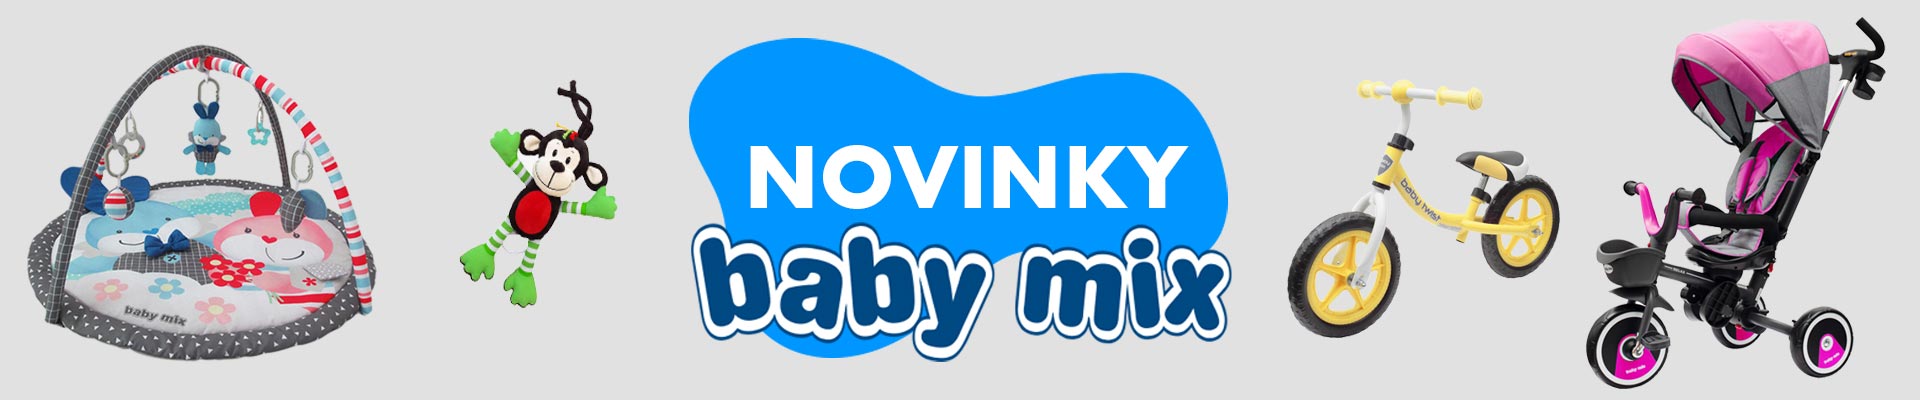 Novinky baby mix